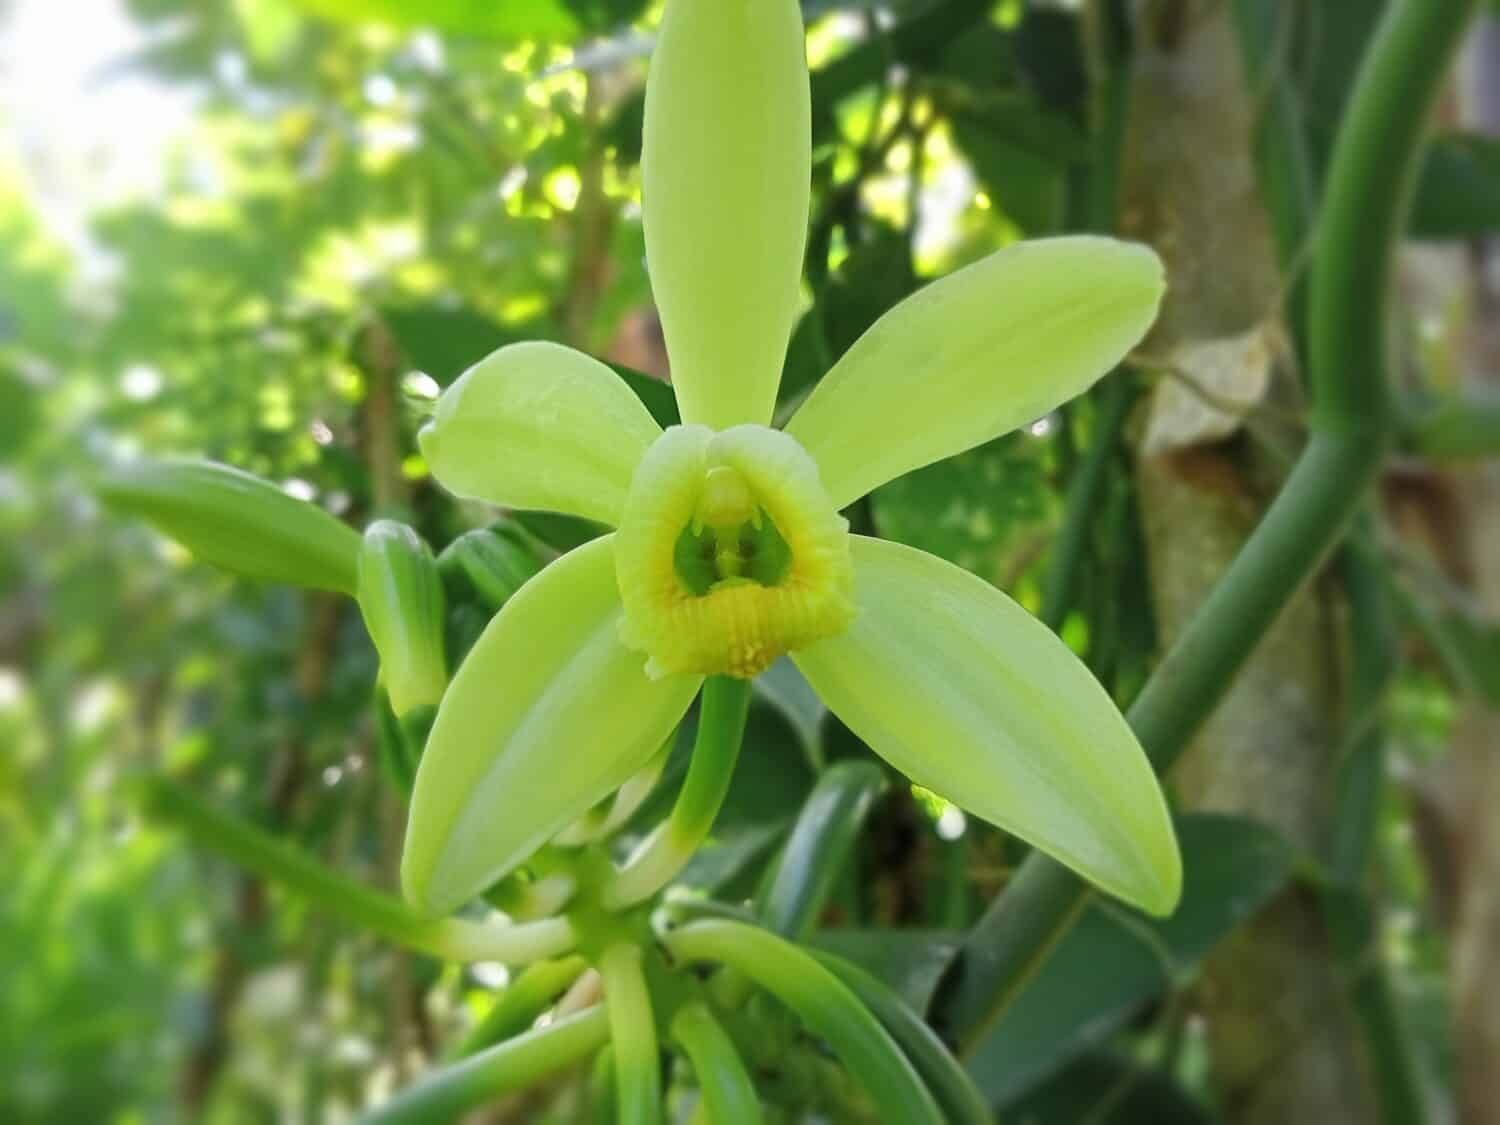 Flower of the Vanilla plant.